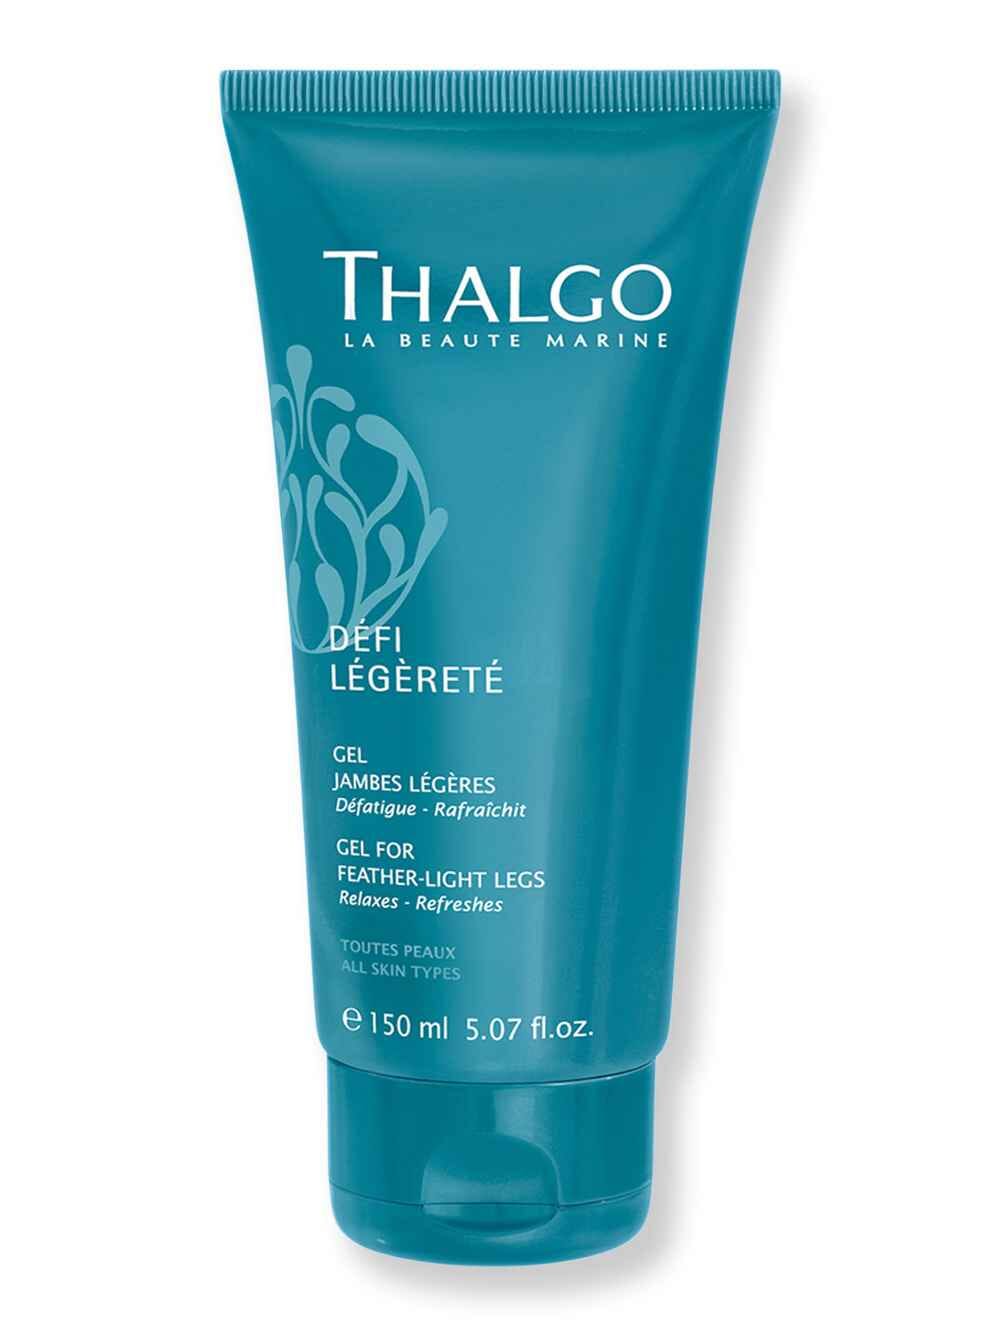 Thalgo Thalgo Gel for Feather-Light Legs 150 ml Body Treatments 